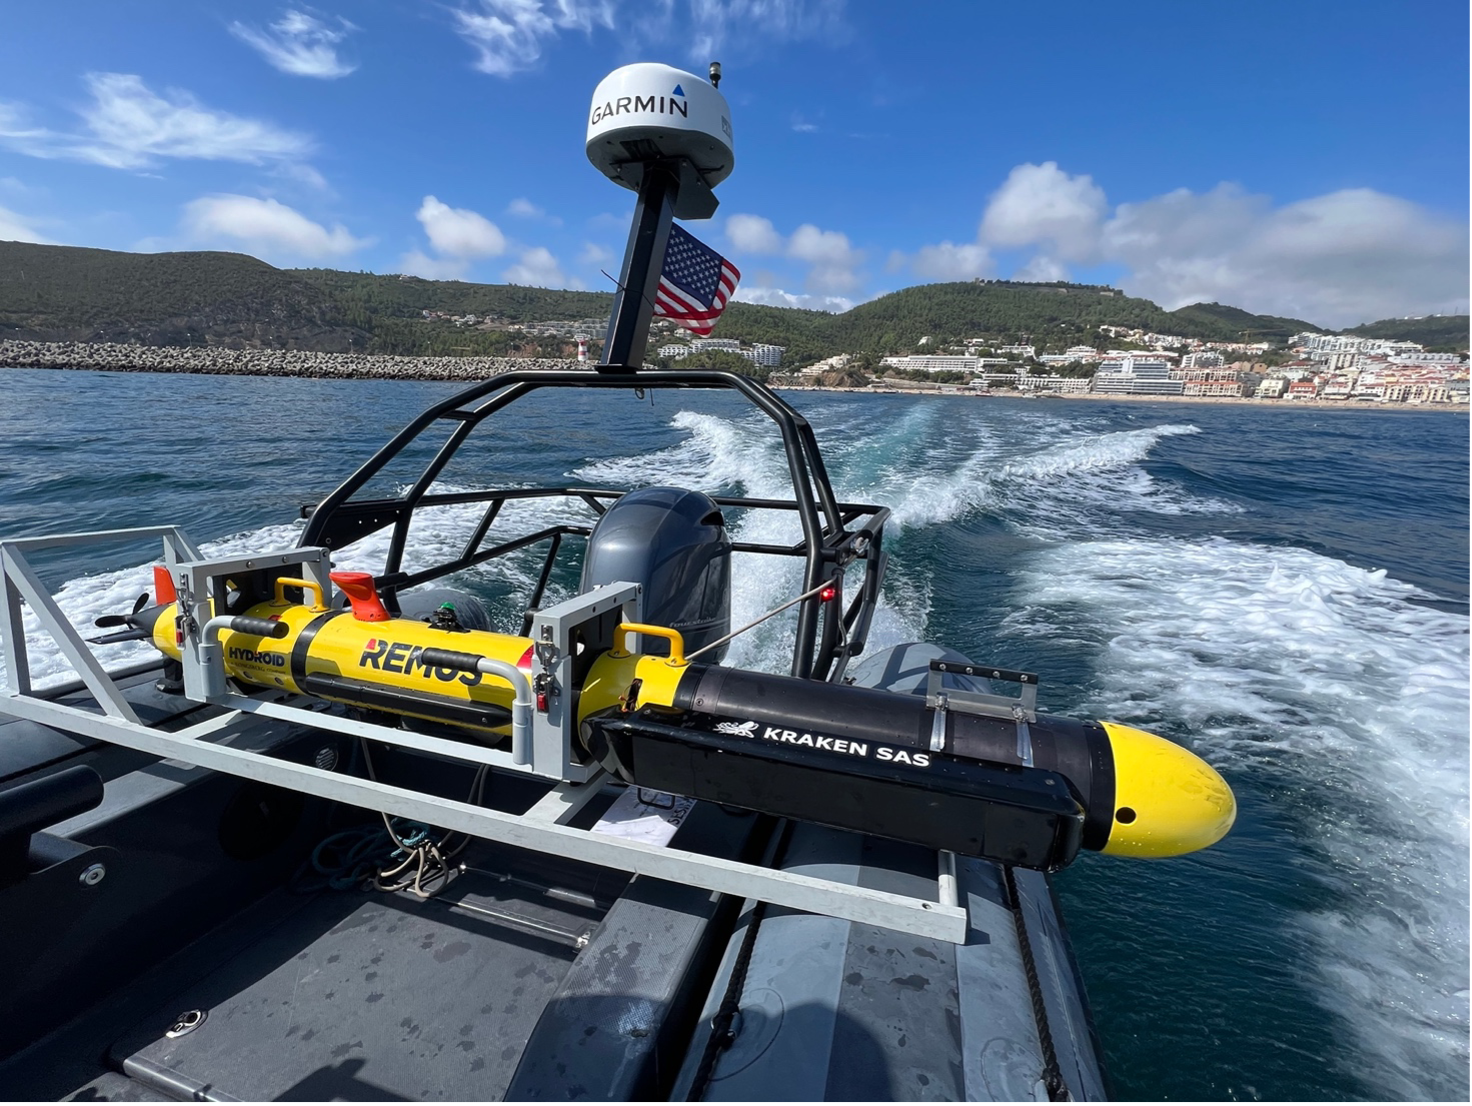 MEMBER NEWS: Kraken Robotics supports multiple countries at NATO exercise